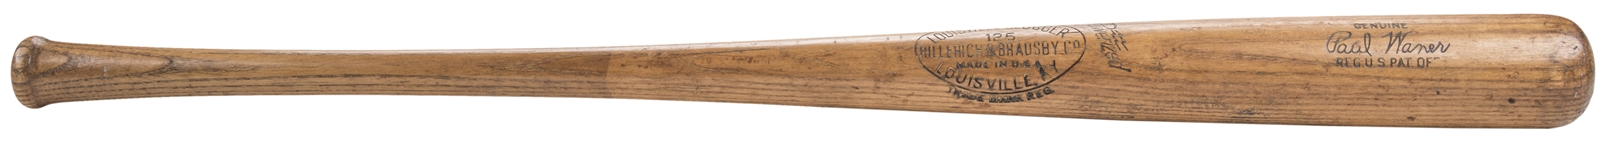 1944 Paul Waner Game Used Hillerich & Bradsby Pre-Model Bat (PSA/DNA GU 8.5)